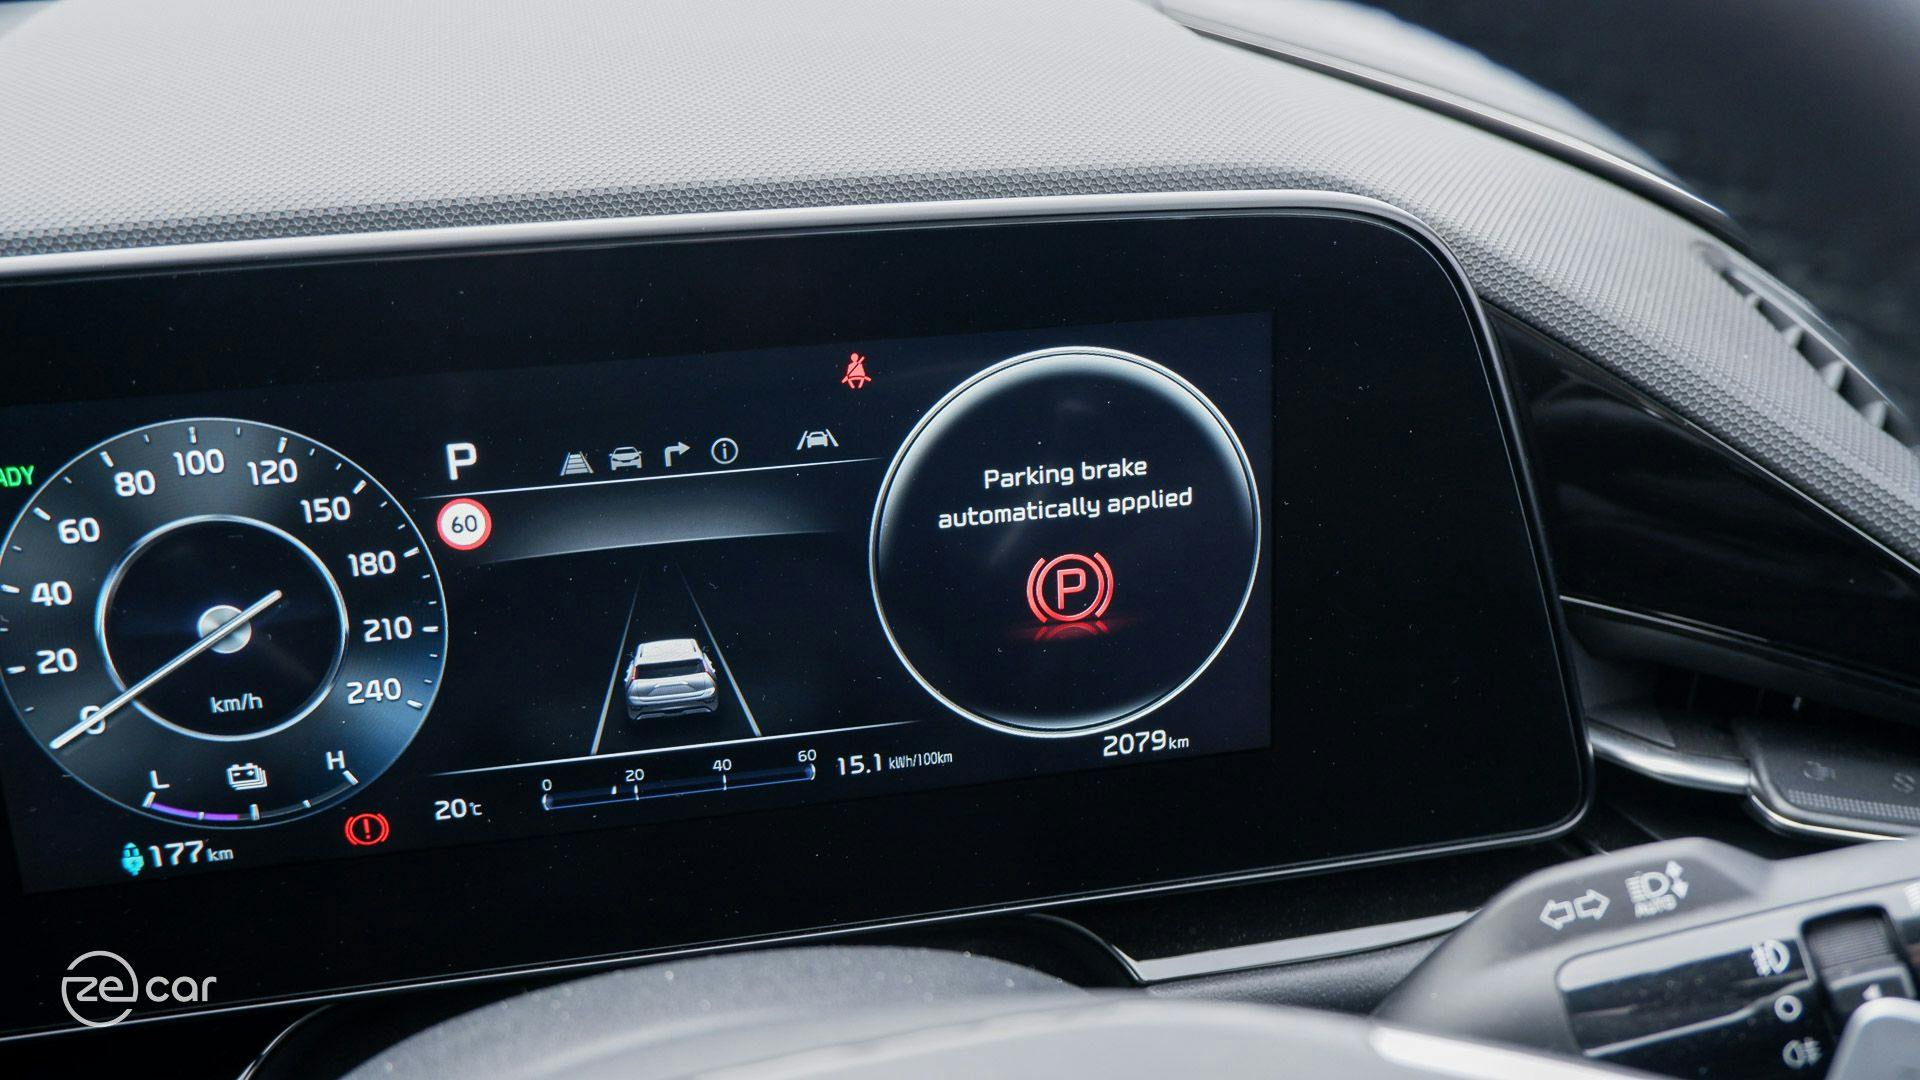 Kia Niro EV instrument cluster showing 'park brake automatically applied' message